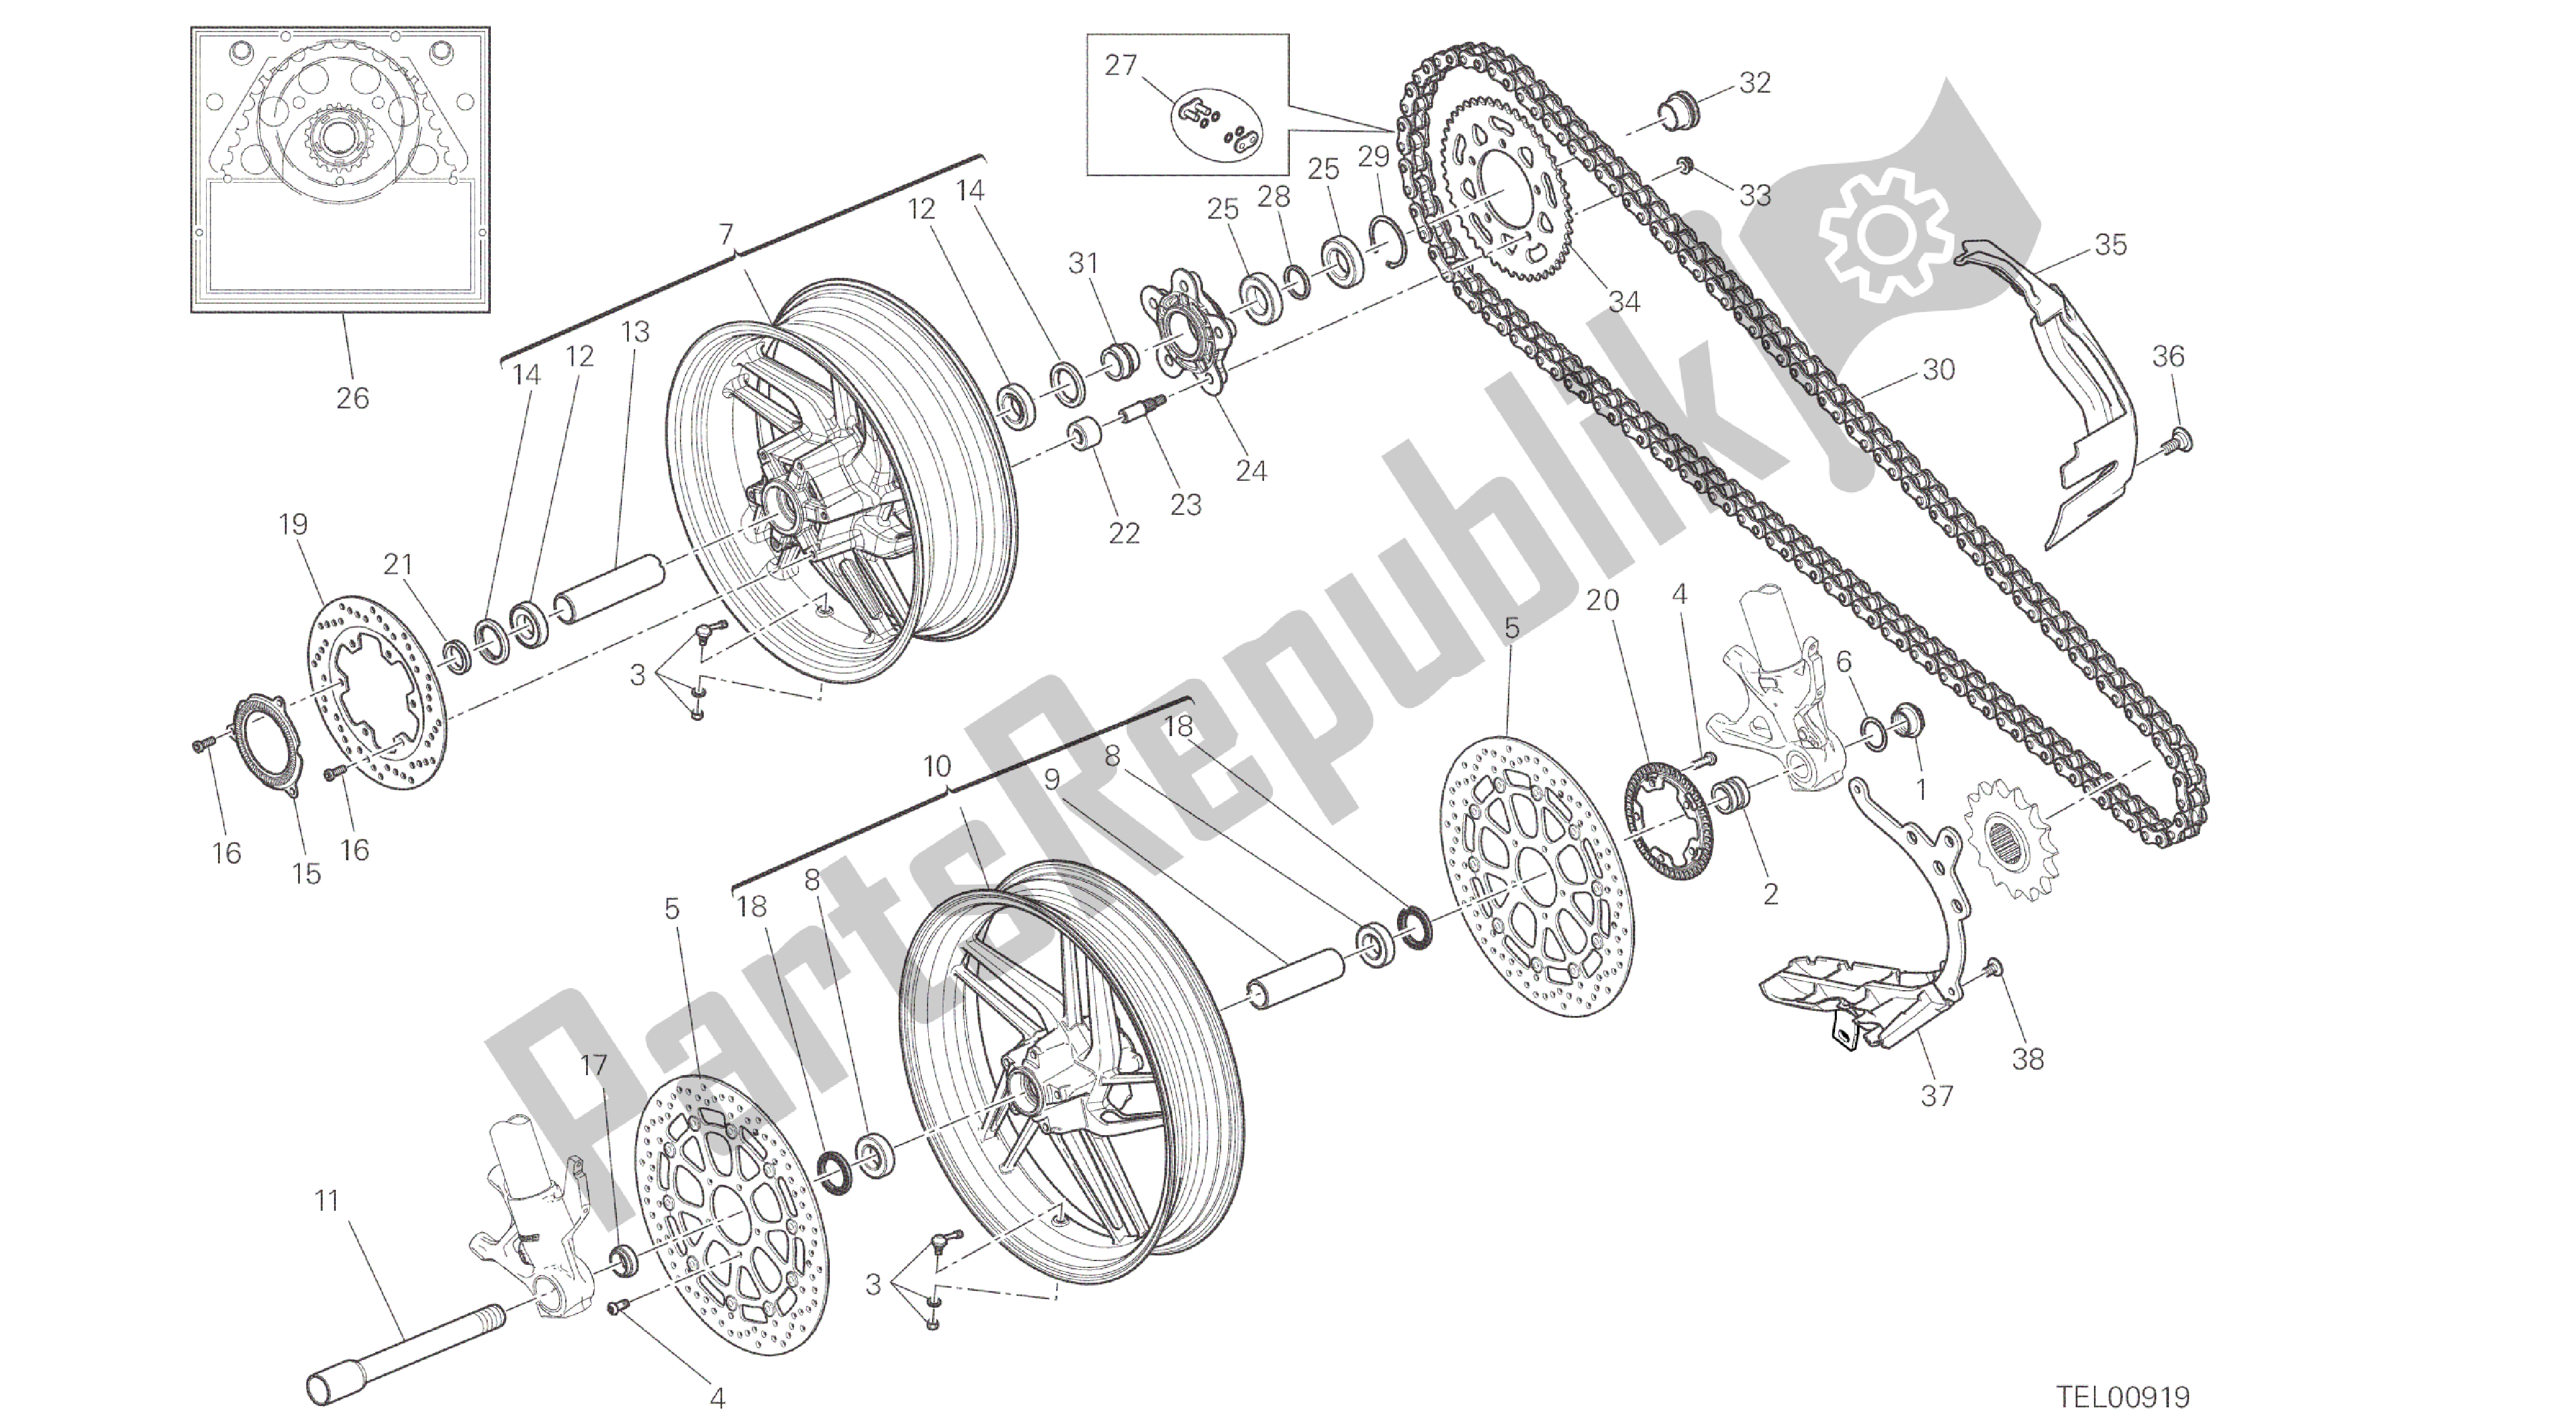 Alle onderdelen voor de Tekening 026 - Ruota Anteriore E Posteriore [mod: 959. 959aws; Xst: Aus, Eur, Fra, Jap, Twn] Groepsframe van de Ducati Panigale 959 2016